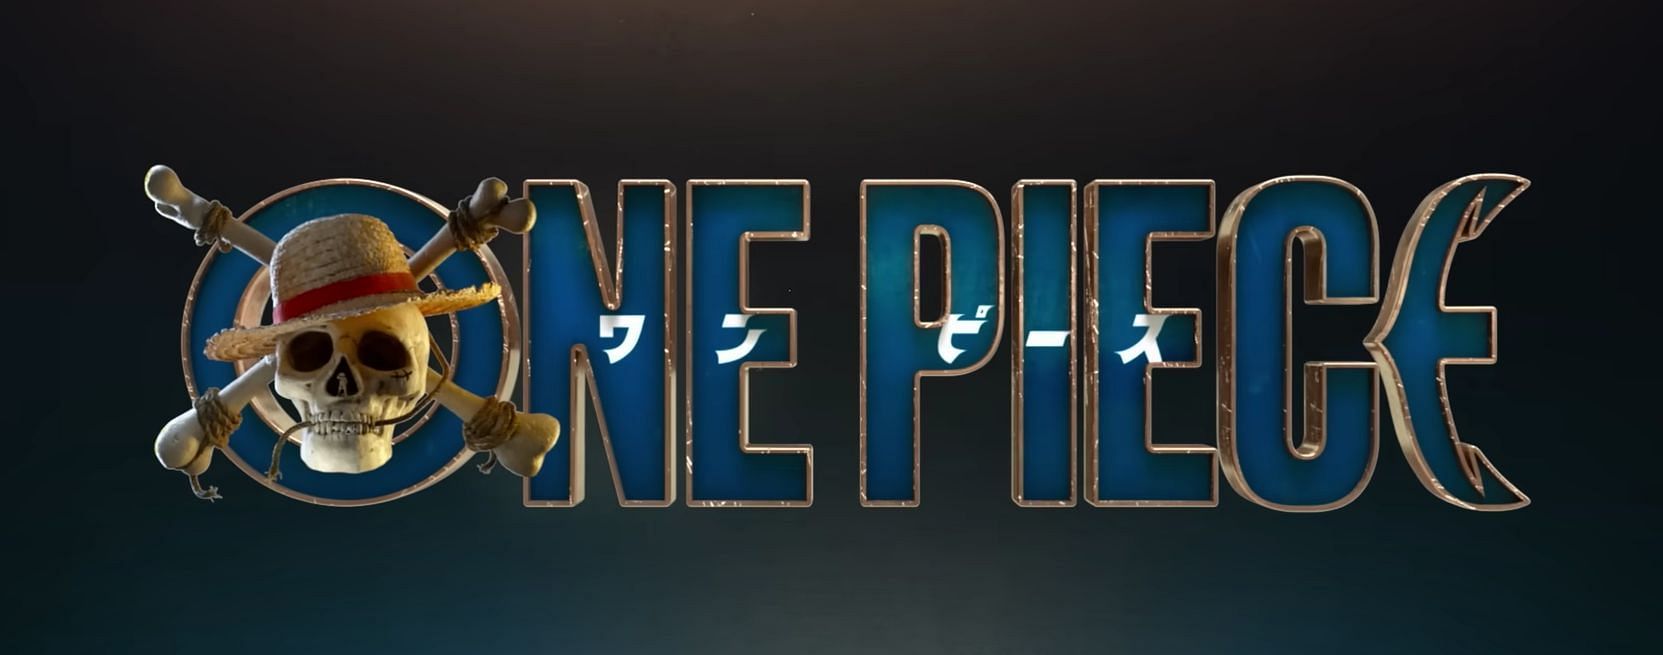 One Piece Netflix Season 2 Gets Development Update from